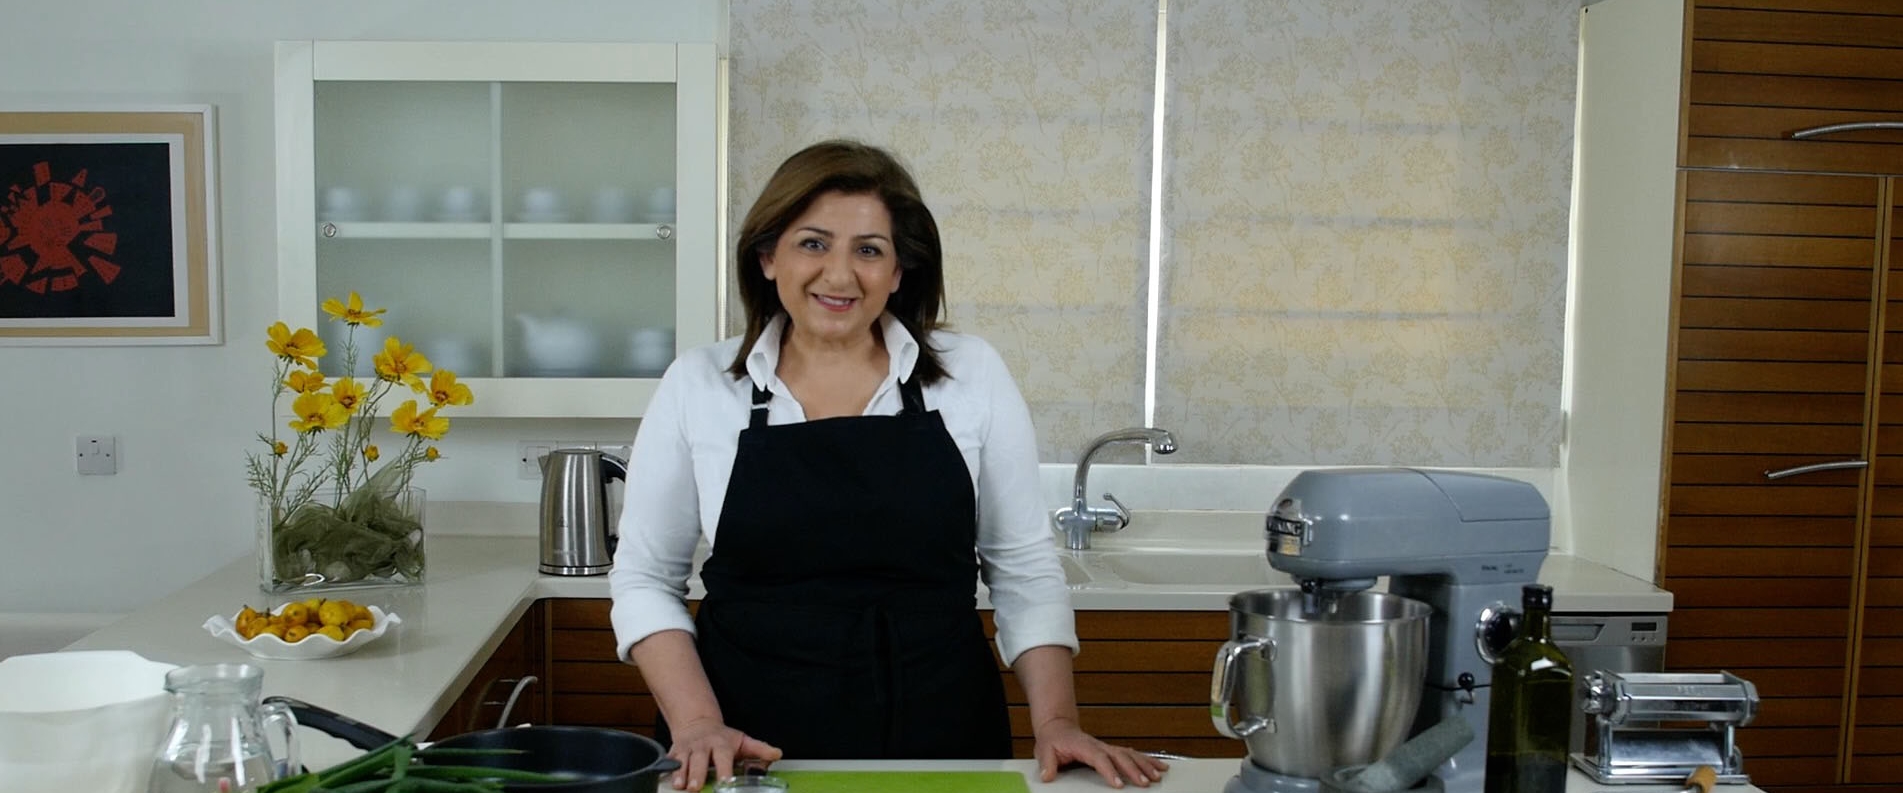 Cyprus cuisine with Marilena: Spanakopita — a spinach pie